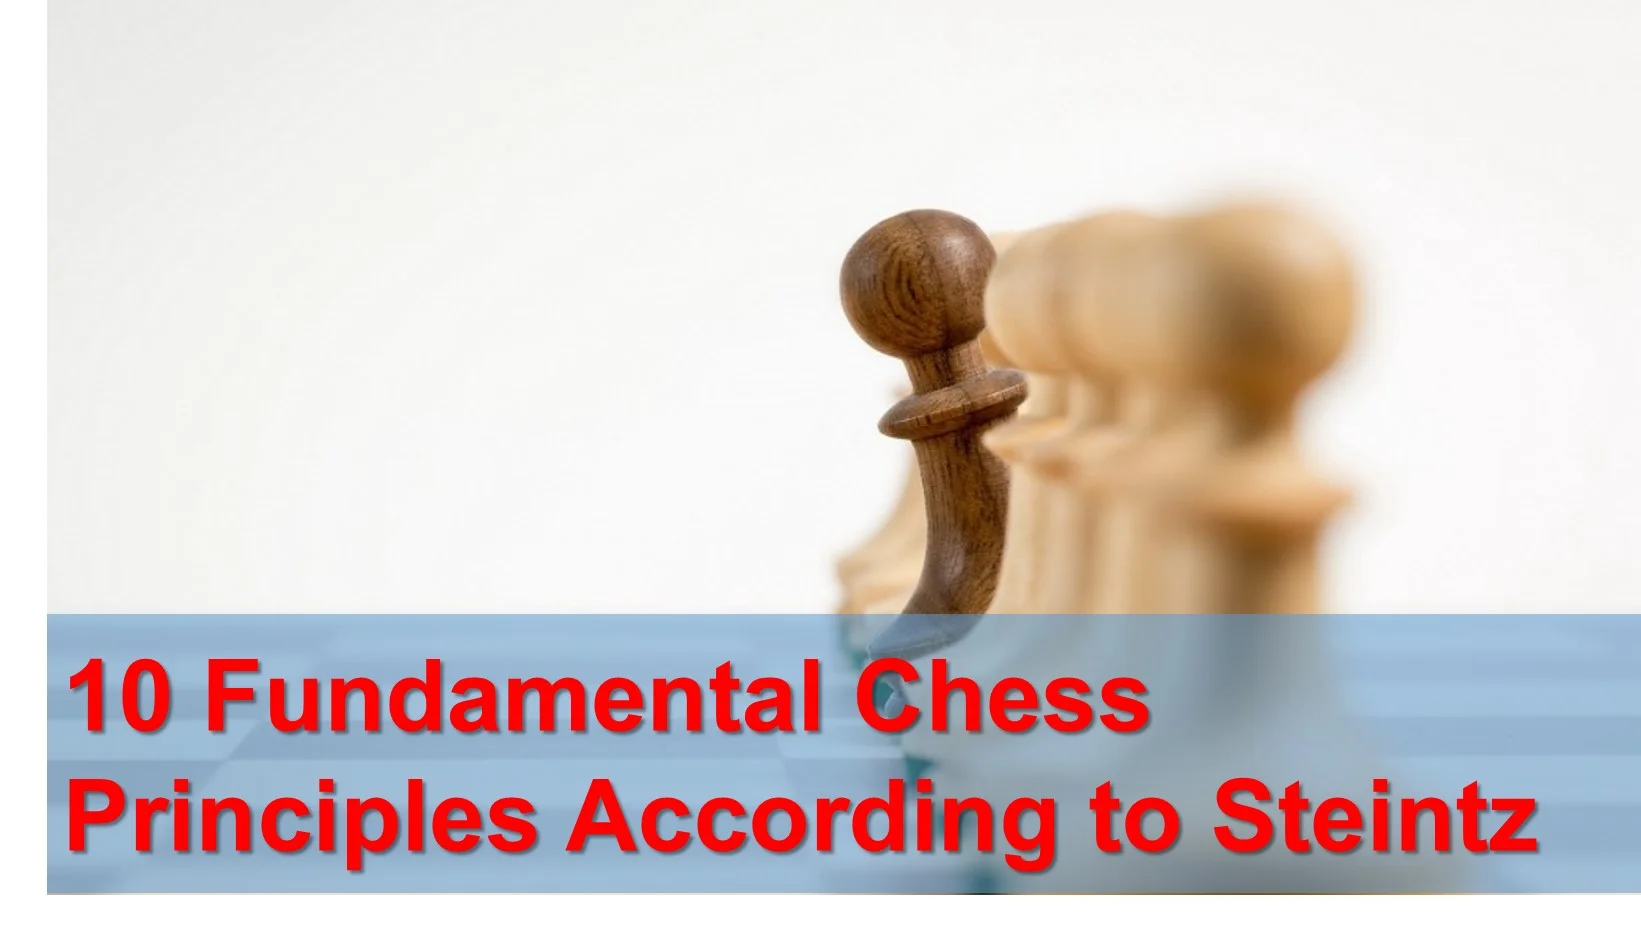 10 Fundamental Chess Principles According to Steinitz